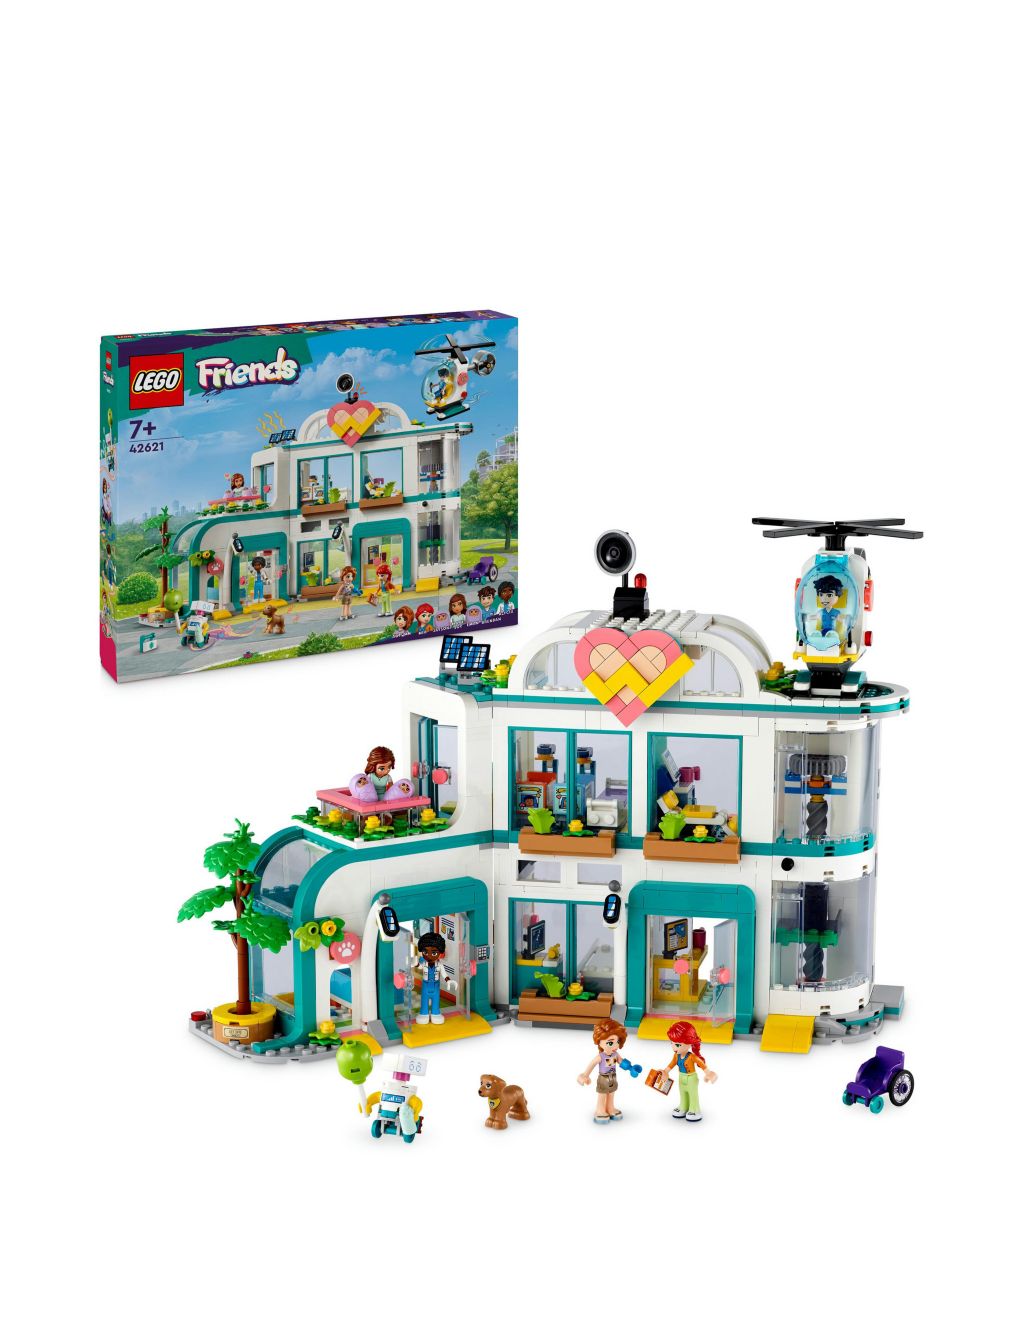 LEGO Friends Heartlake City Hospital Toy Set 42621 (7+ Yrs) 2 of 7